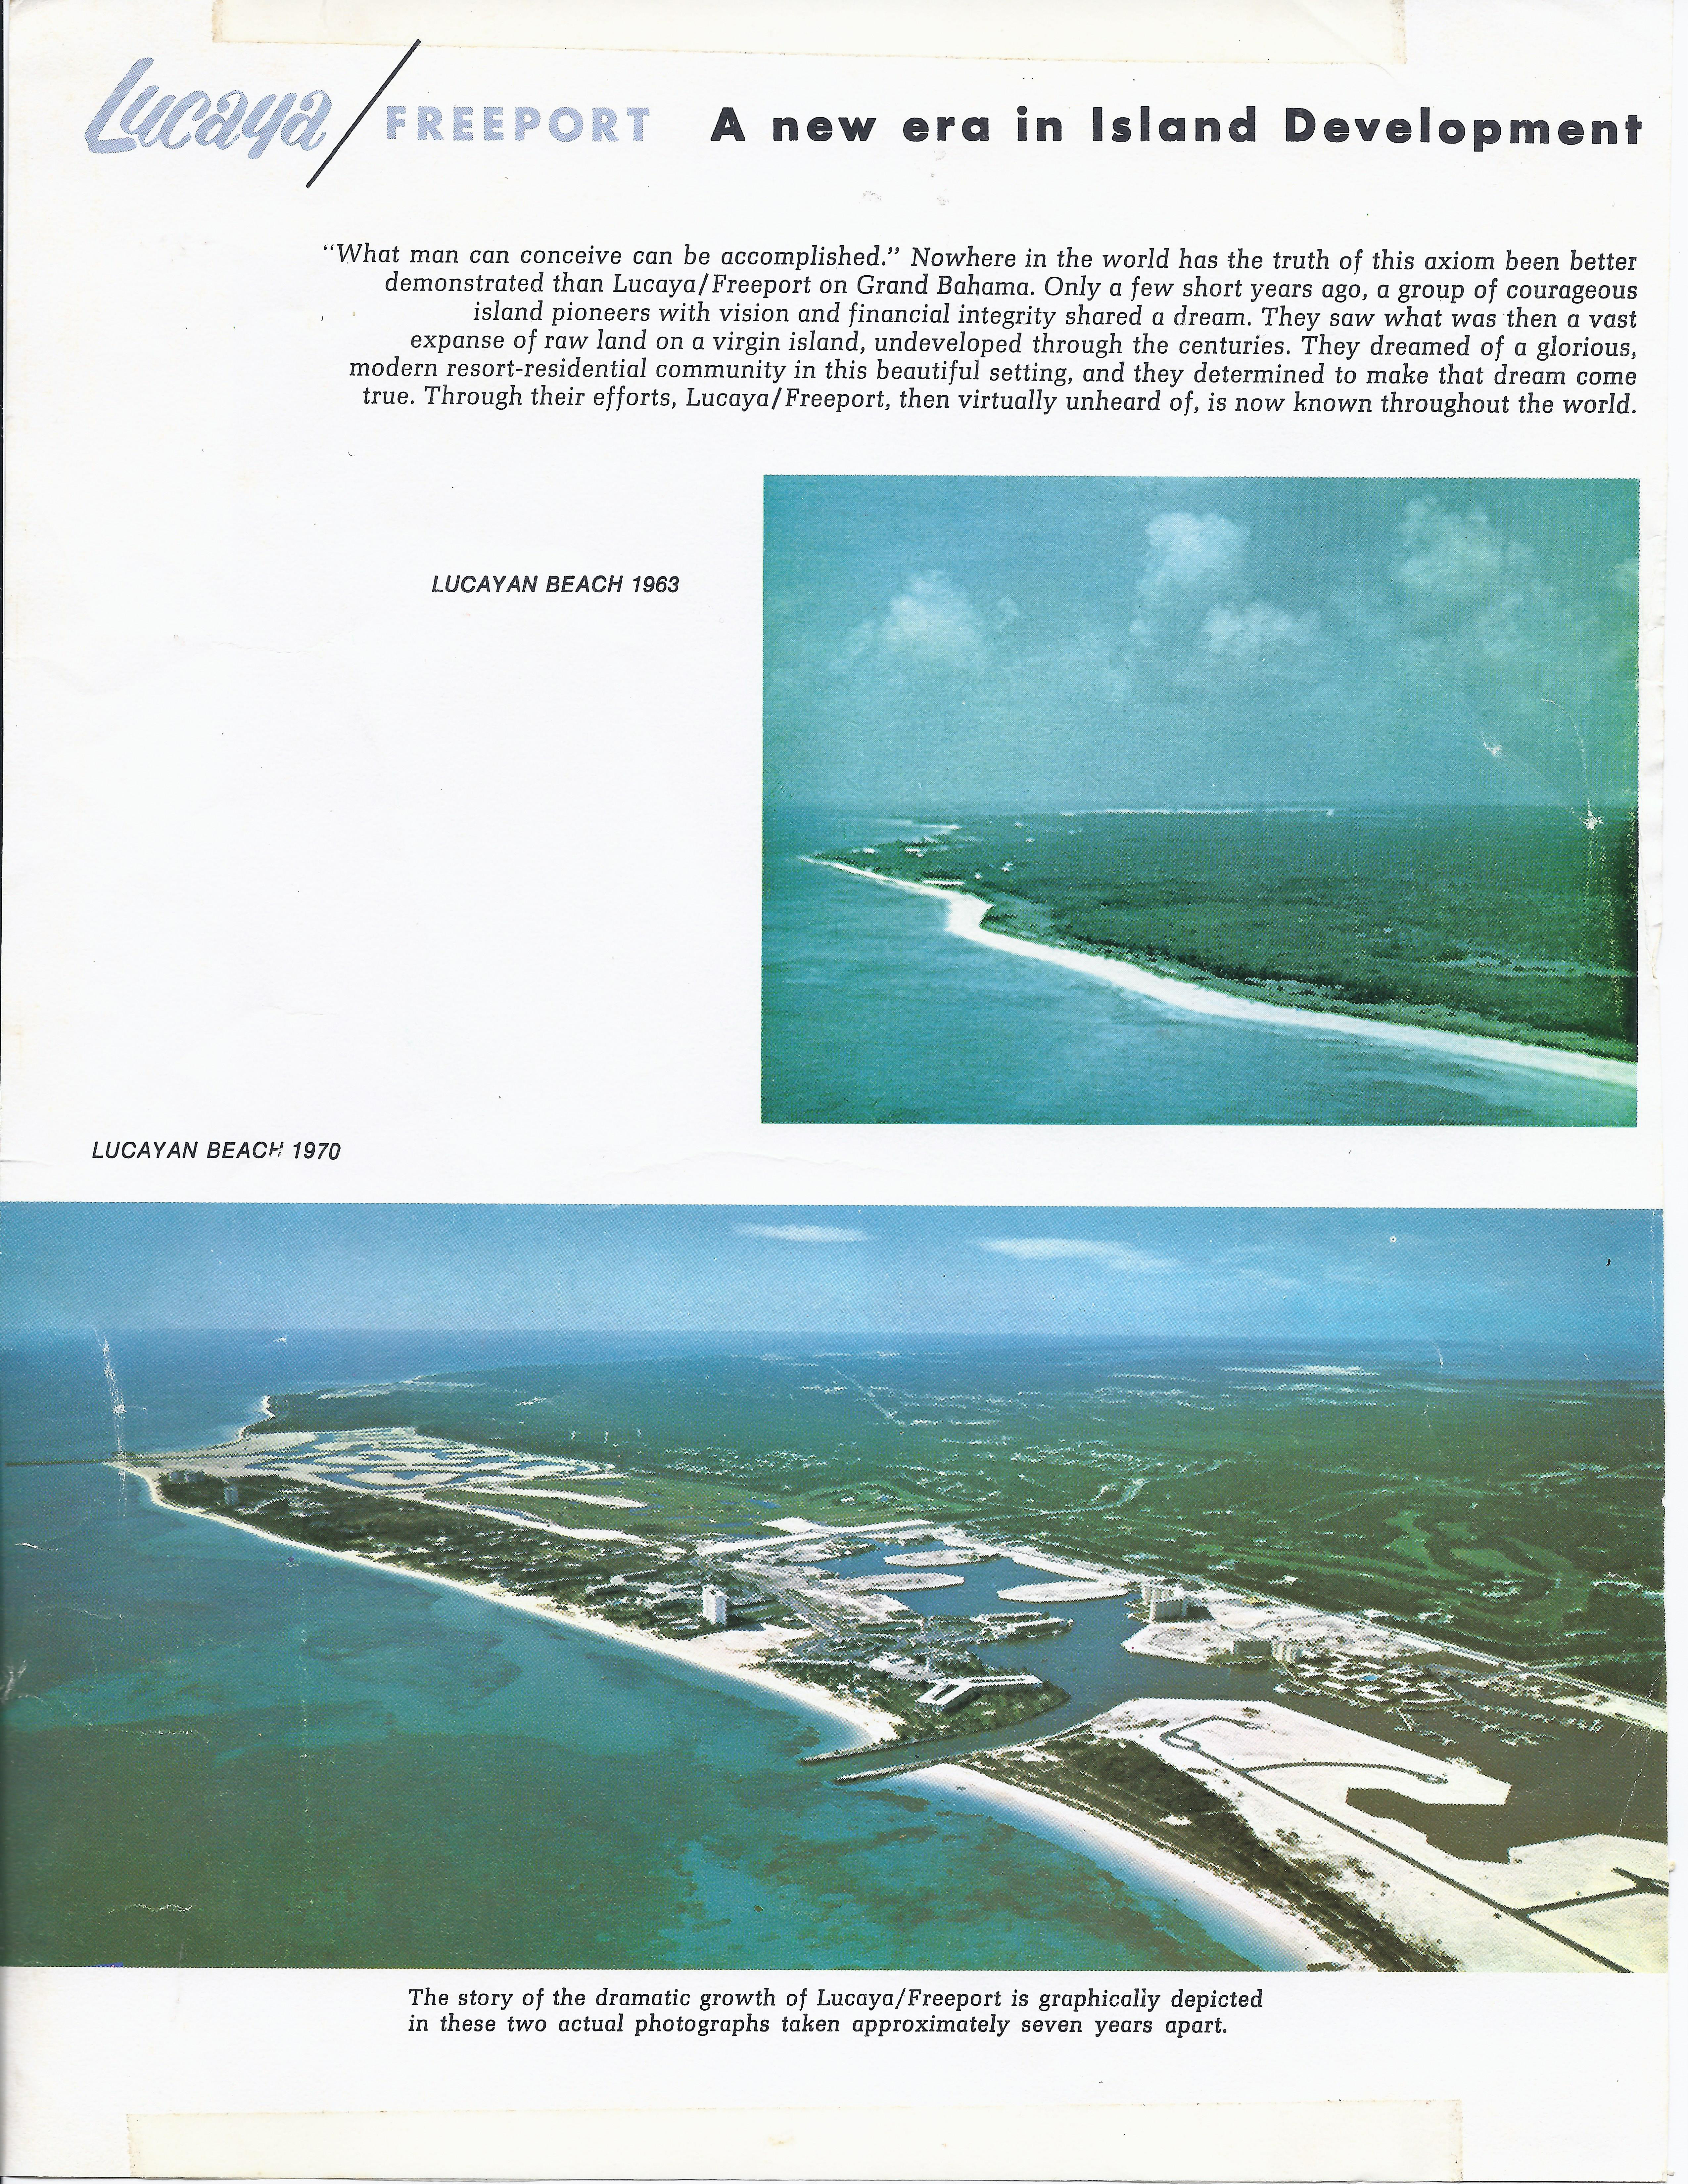 1970 Lucaya/Freeport advertisement